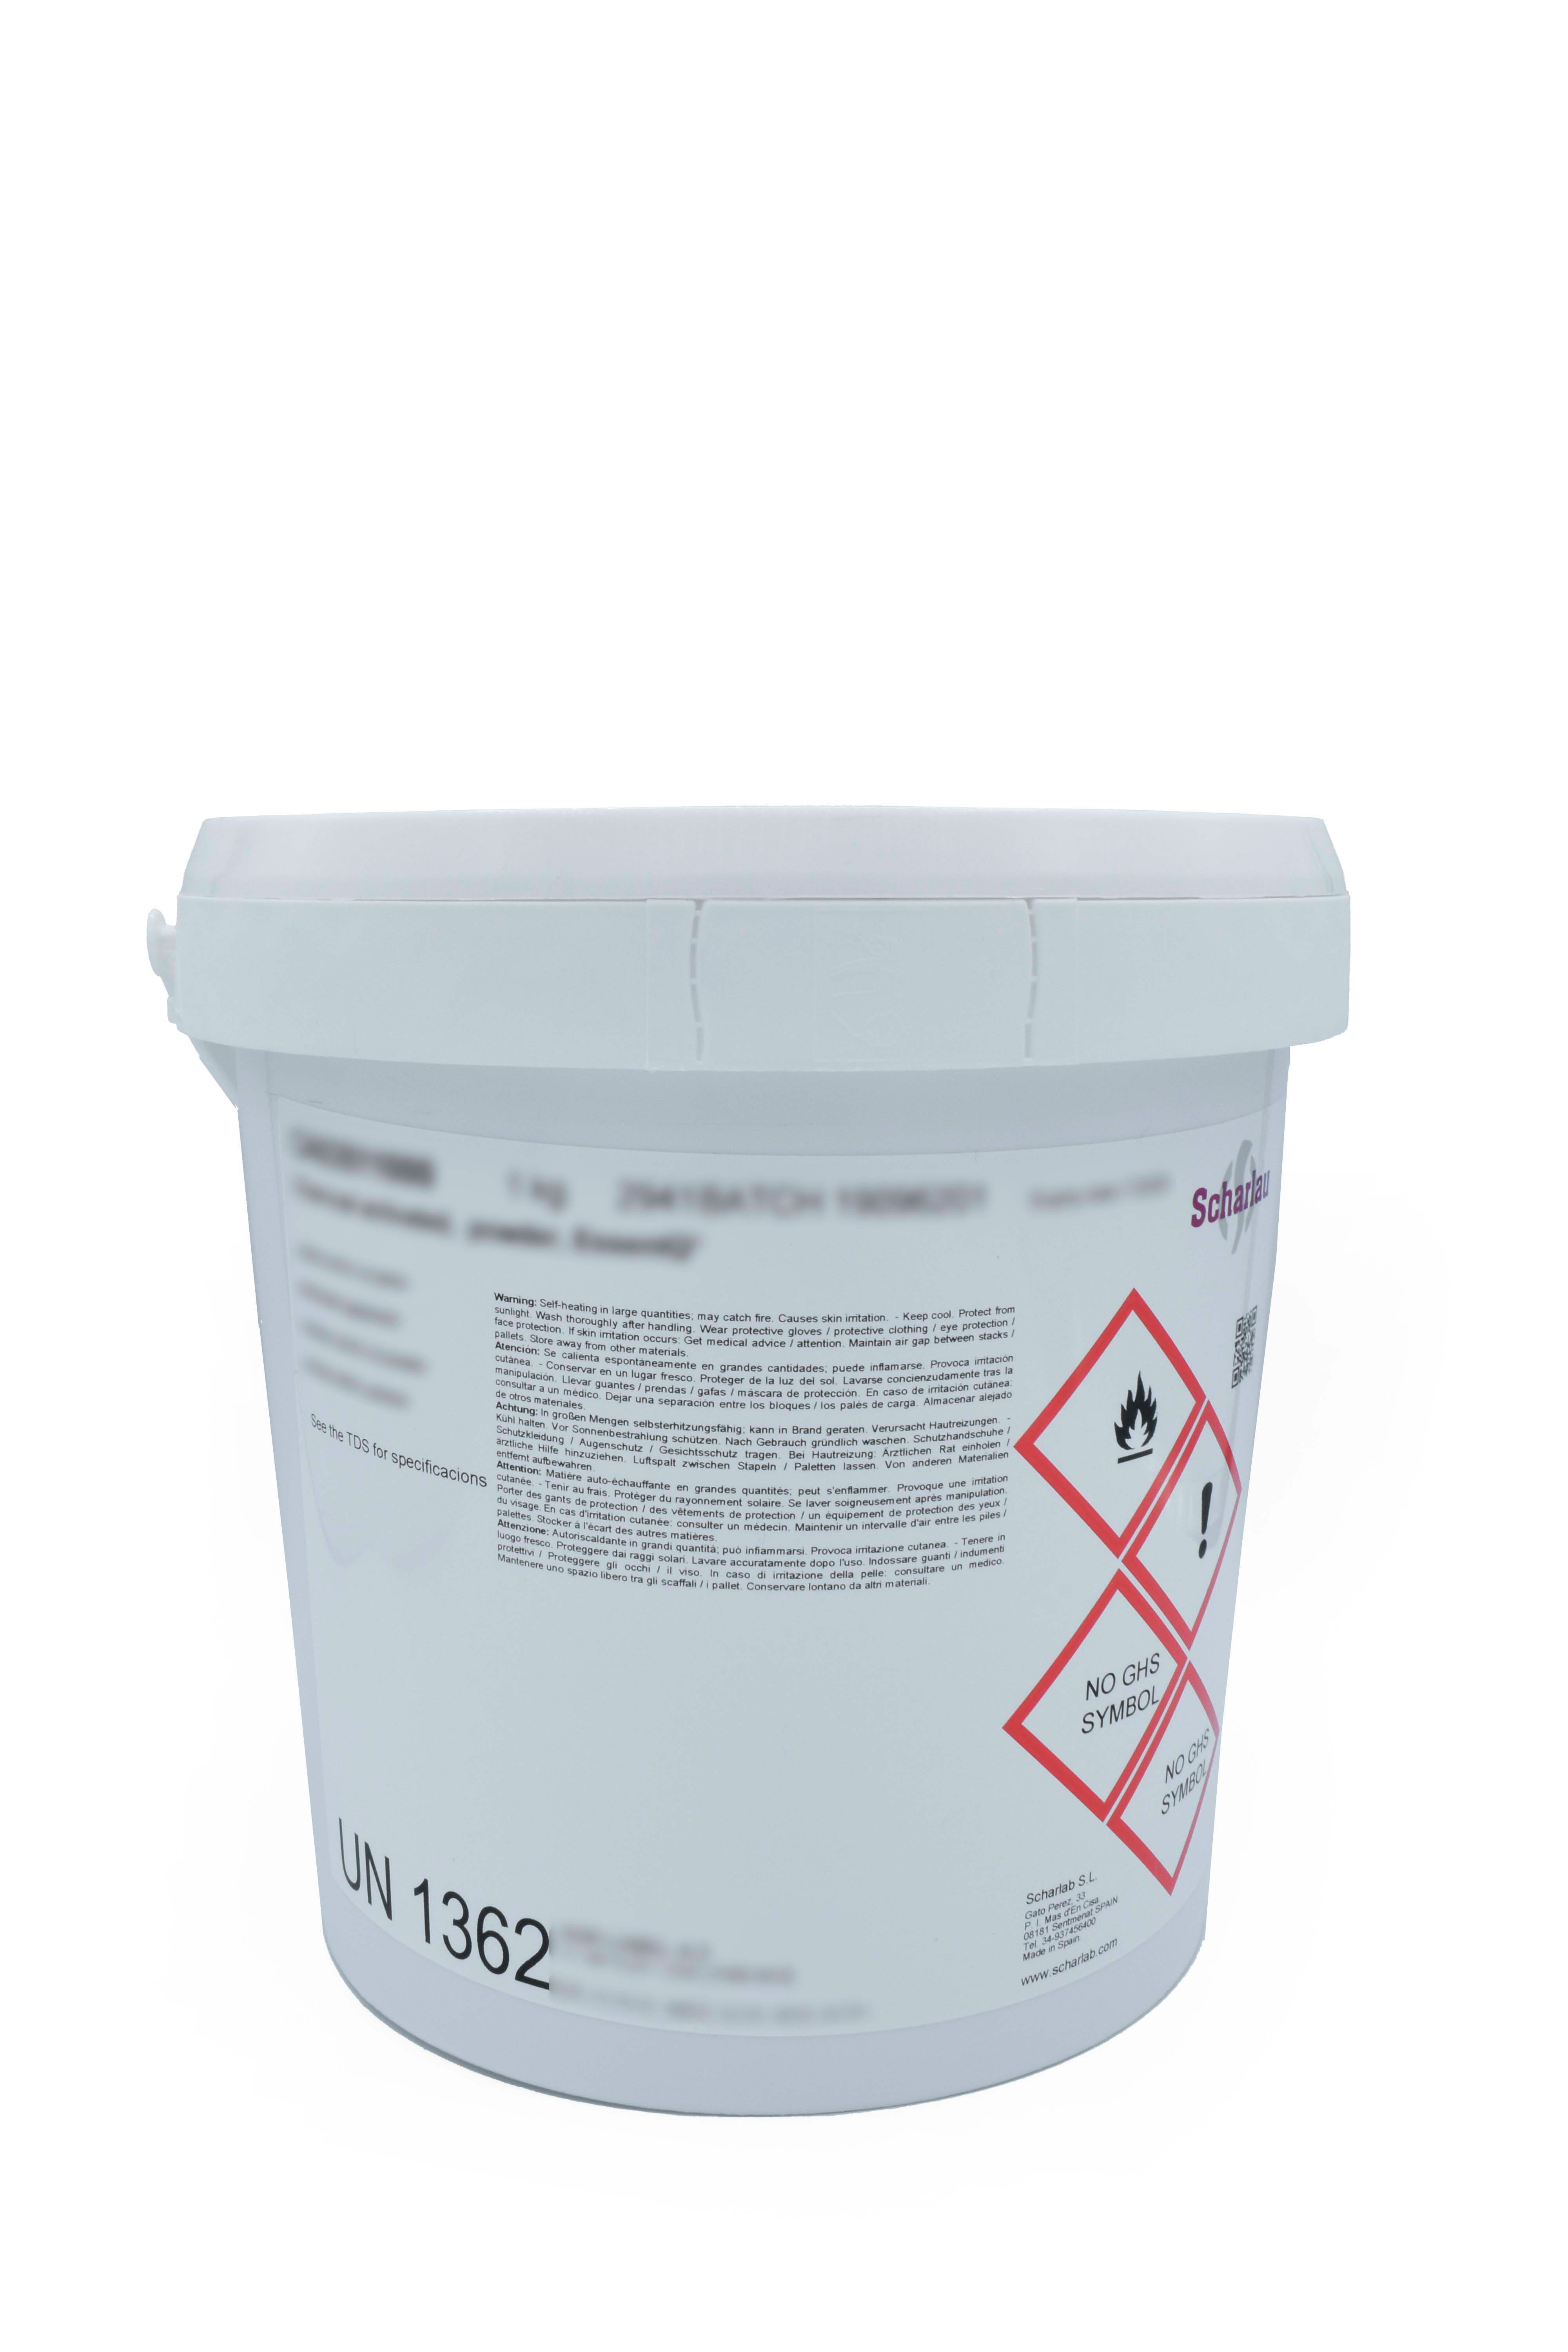 Sodio sulfato anhidro, granulado, para análisis, ExpertQ®, ACS, ISO